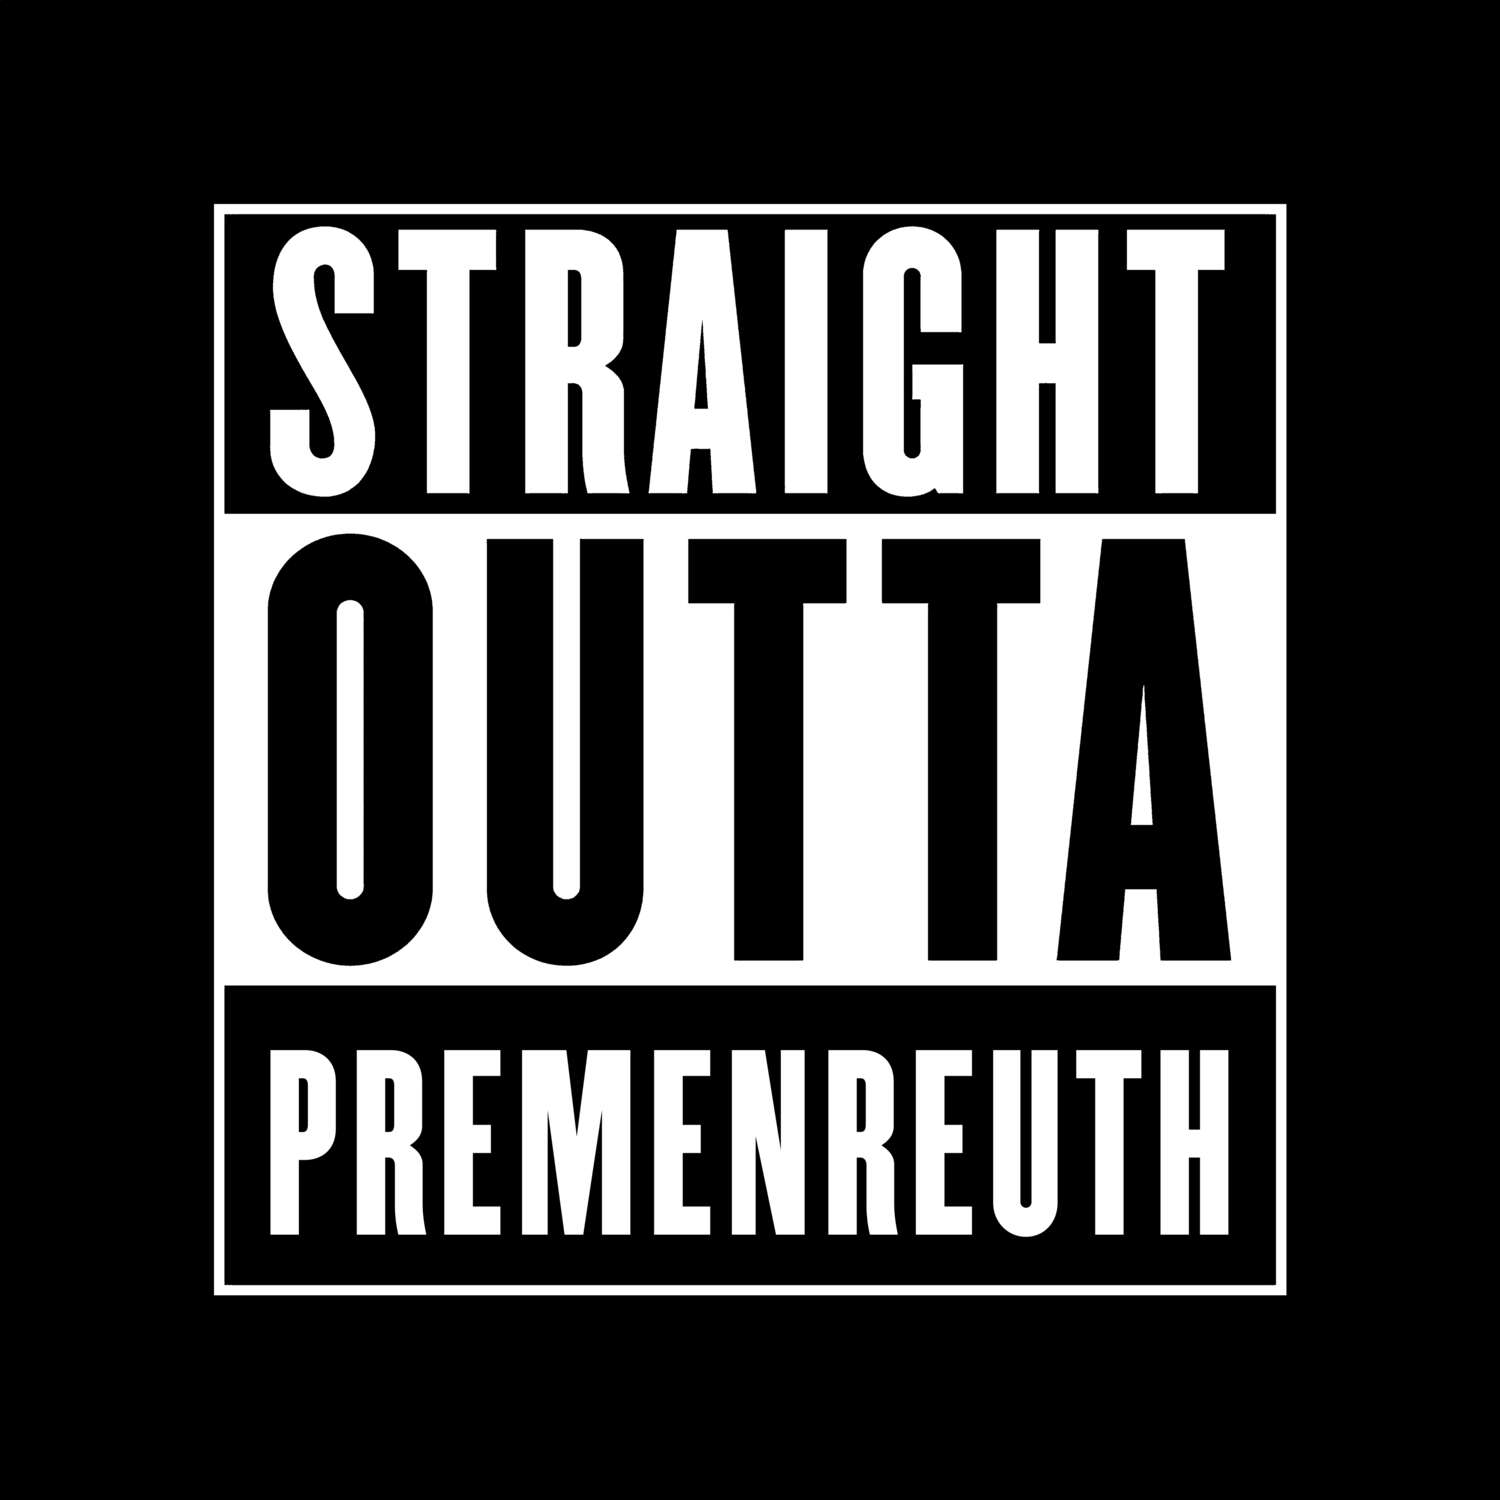 Premenreuth T-Shirt »Straight Outta«